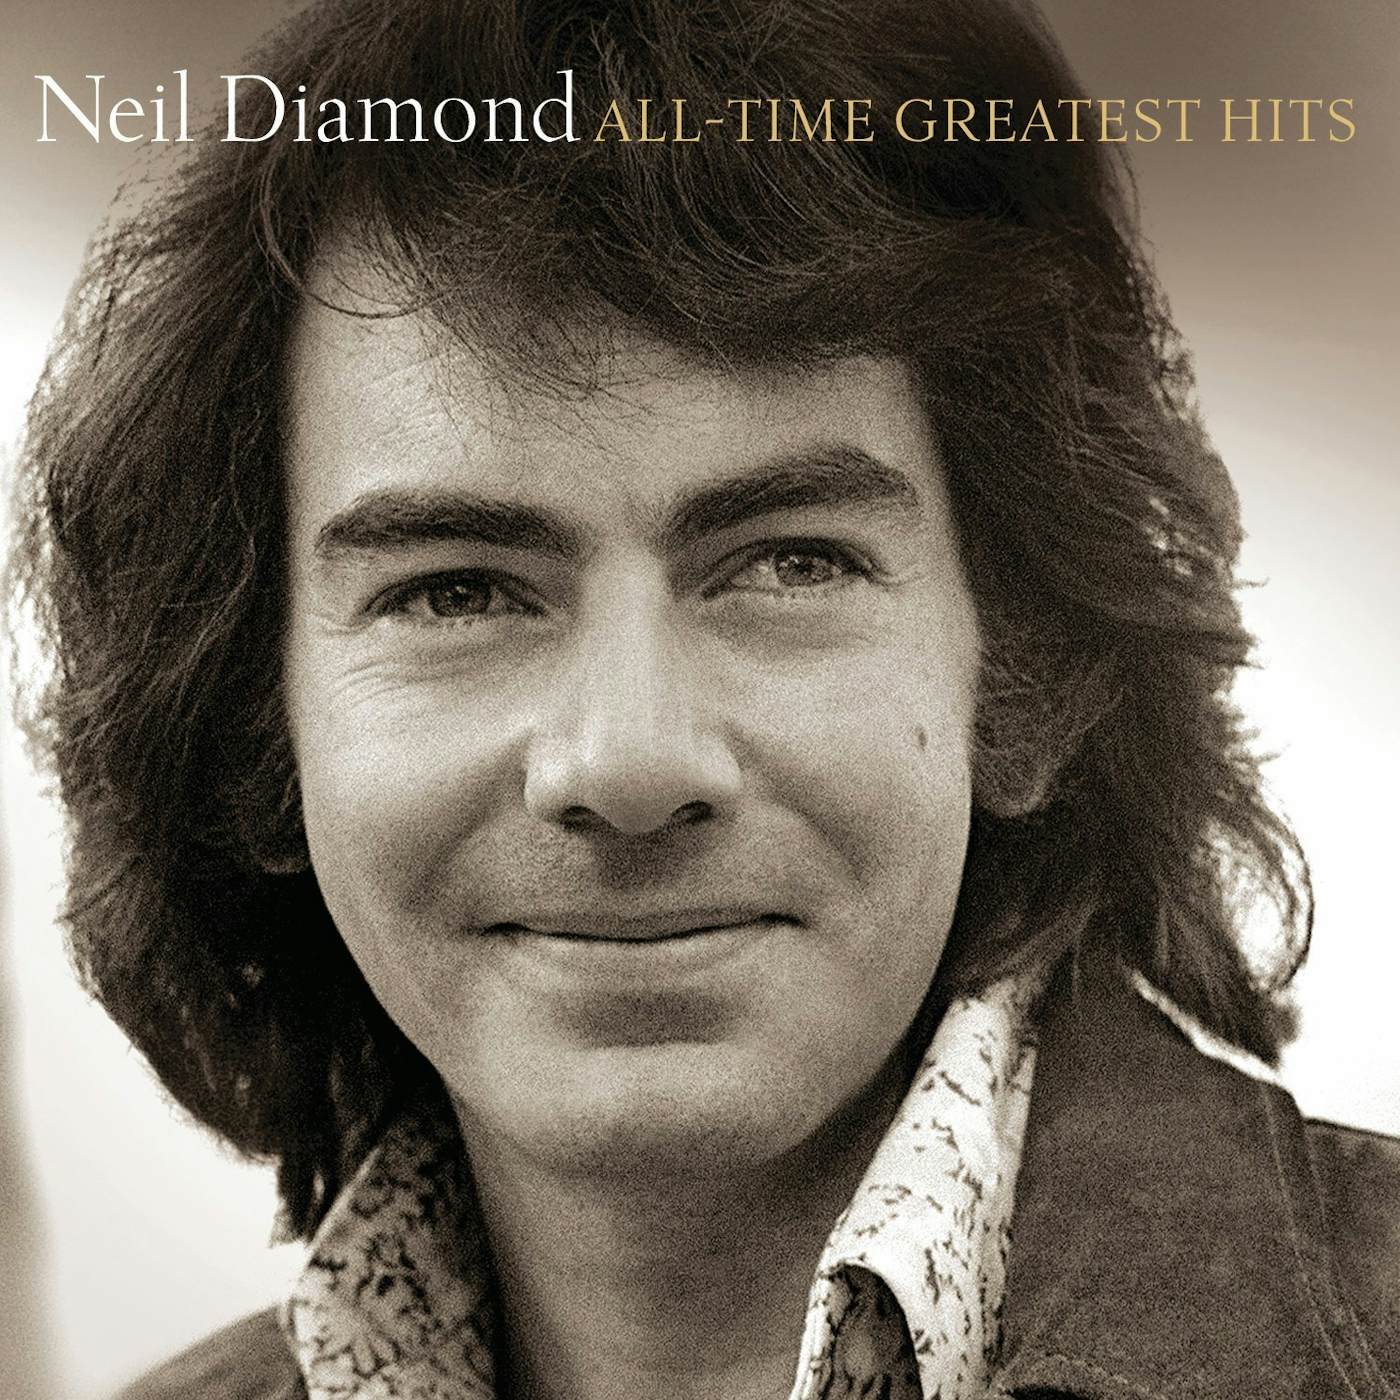 Neil Diamond ALL-TIME GREATEST HITS CD